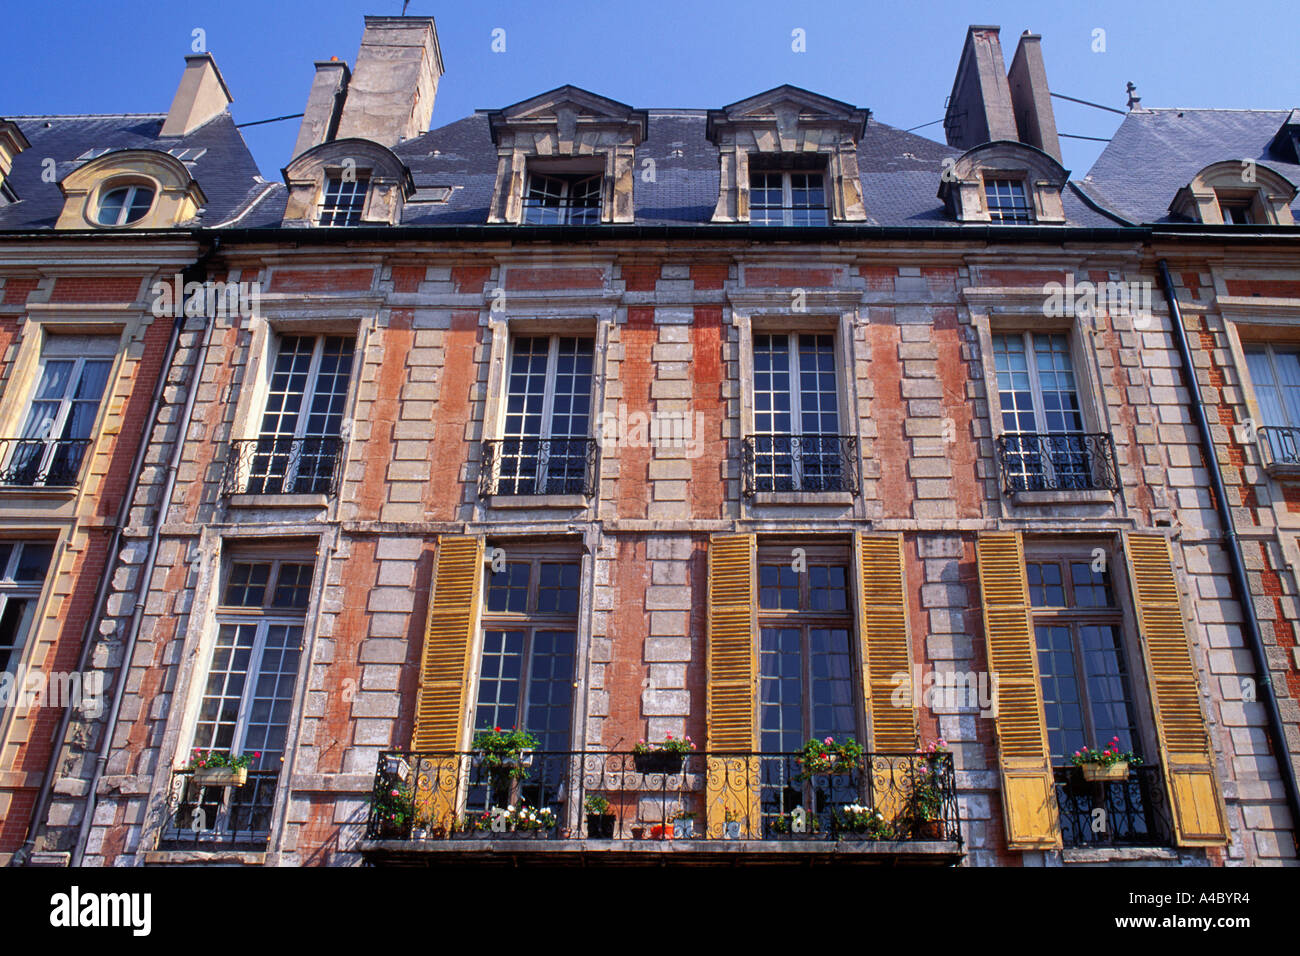 Paris, Place des Vosges, Le Marais. Brick and stone facade of historic landmark 17th century buildings in central Paris in the 4th Arrondissement. Stock Photo